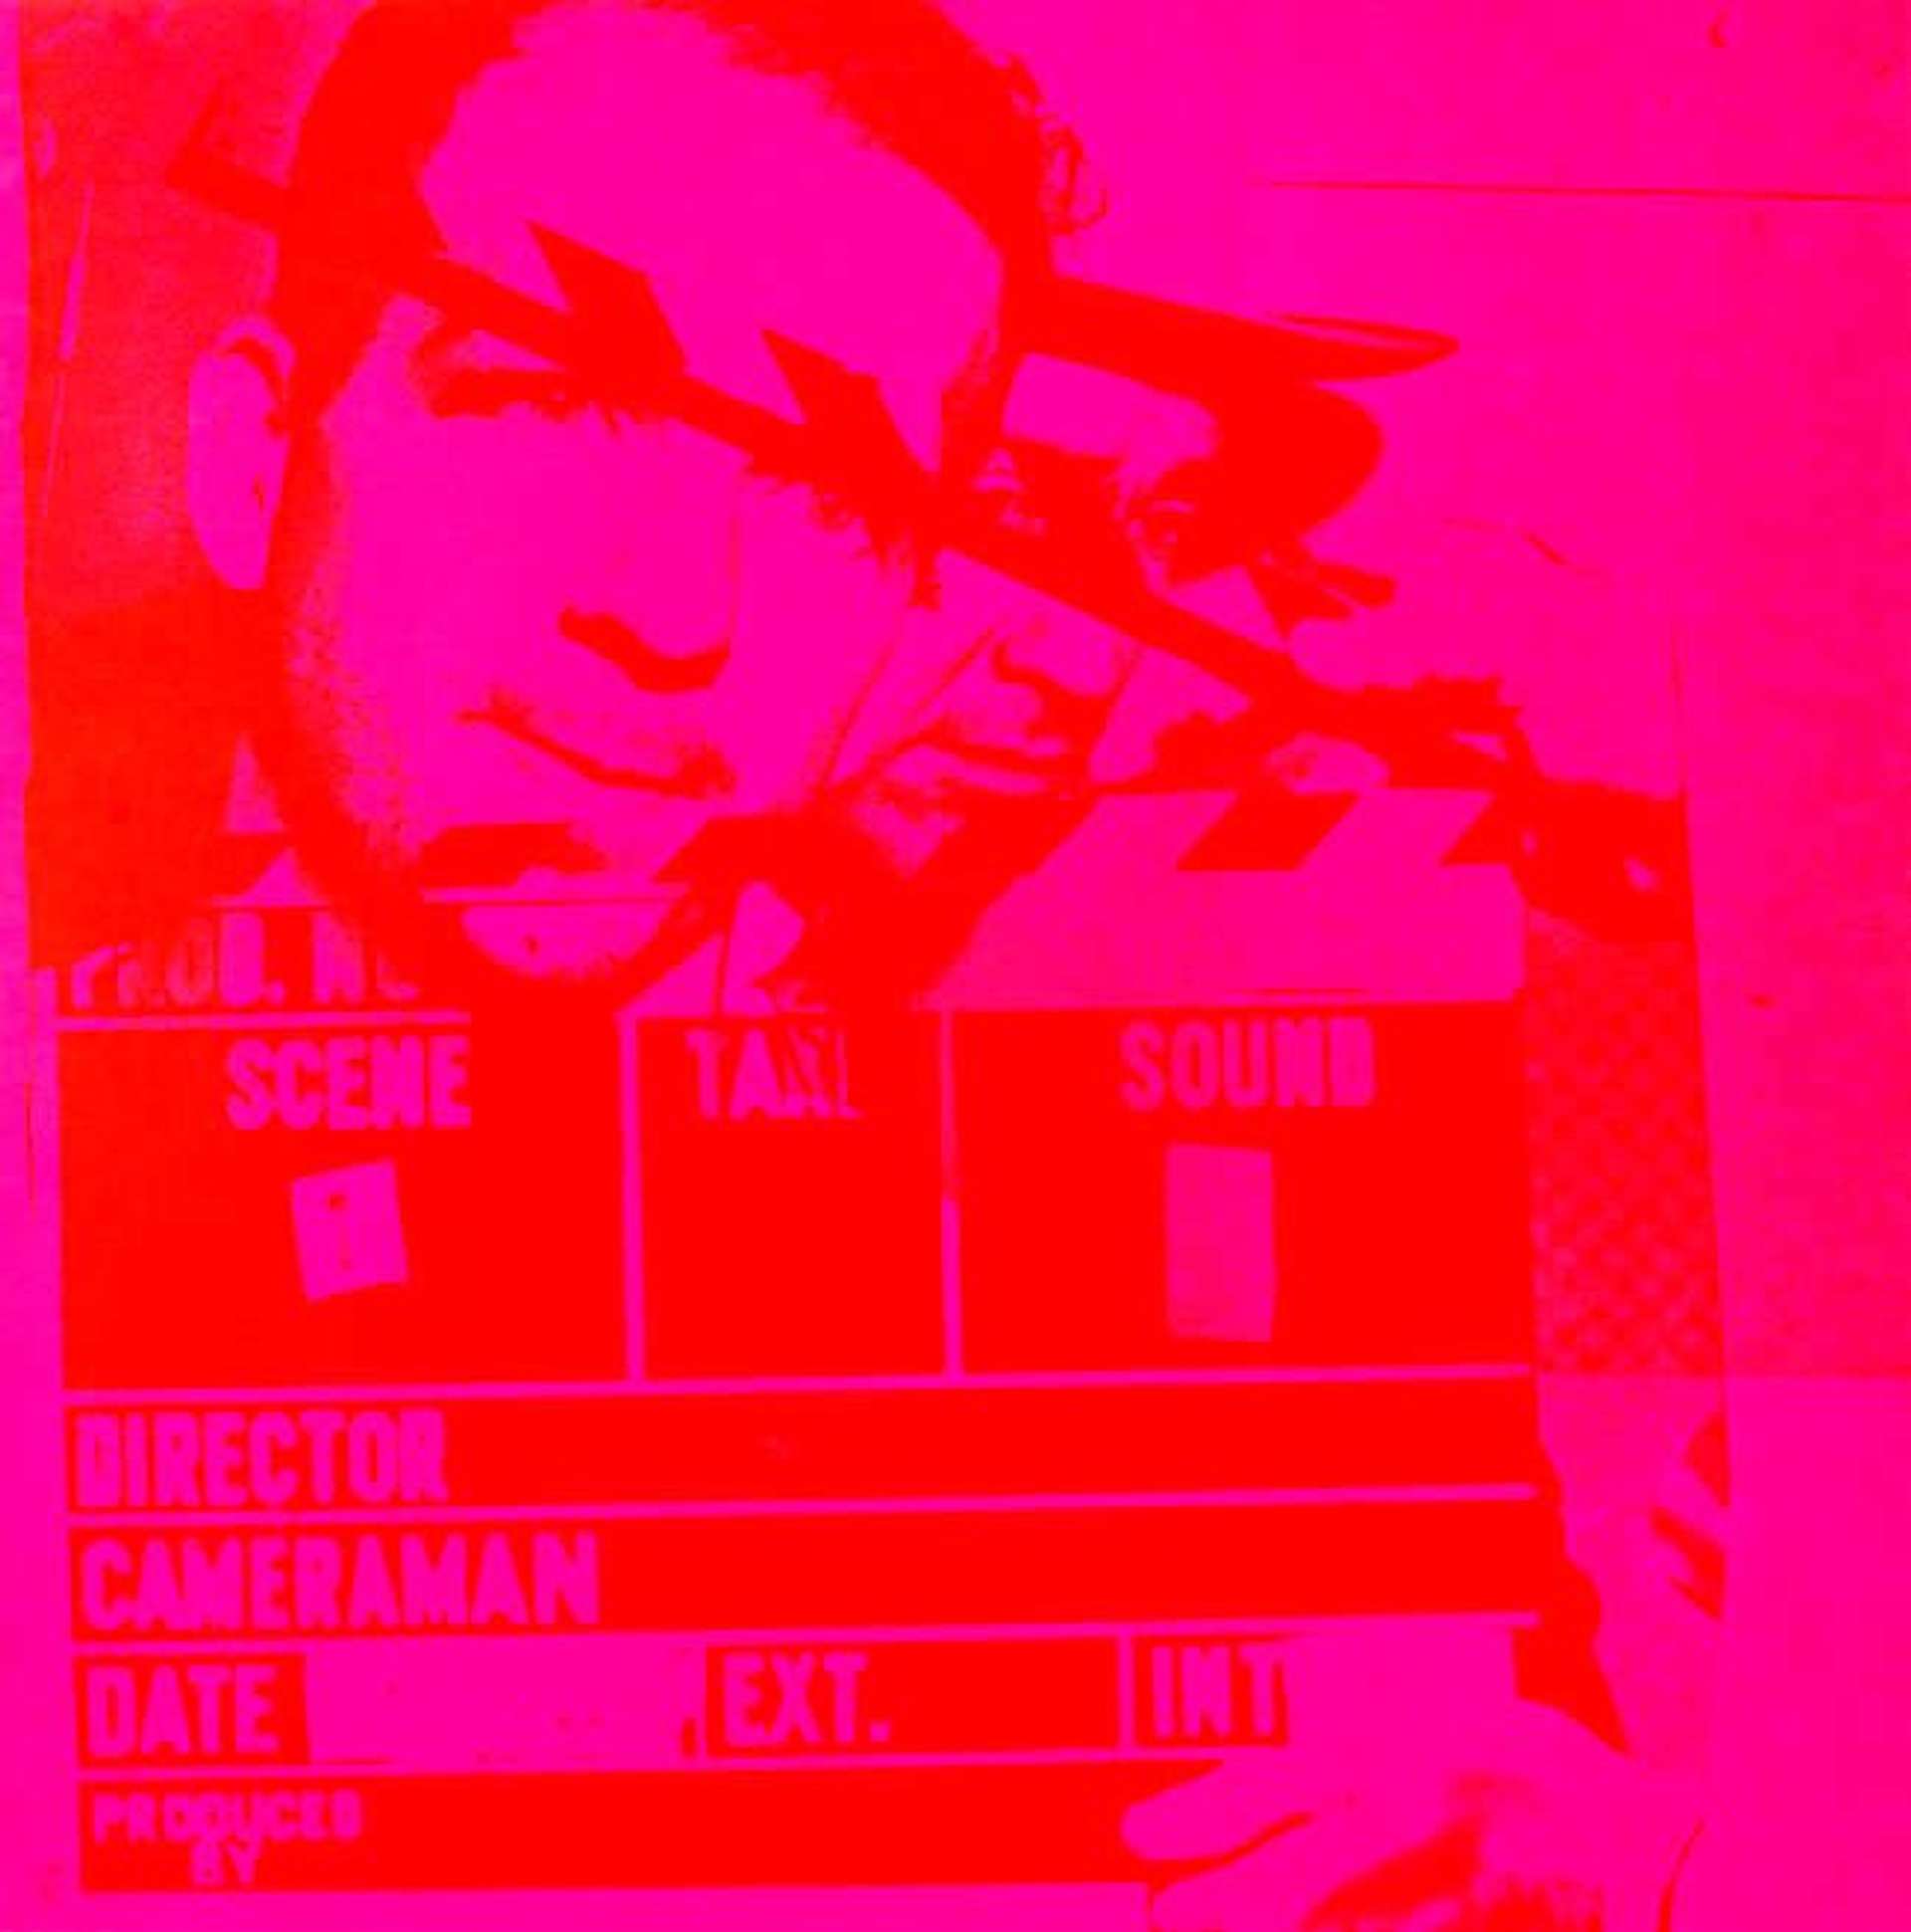 Flash November 22 (F. & S. II.36) by Andy Warhol